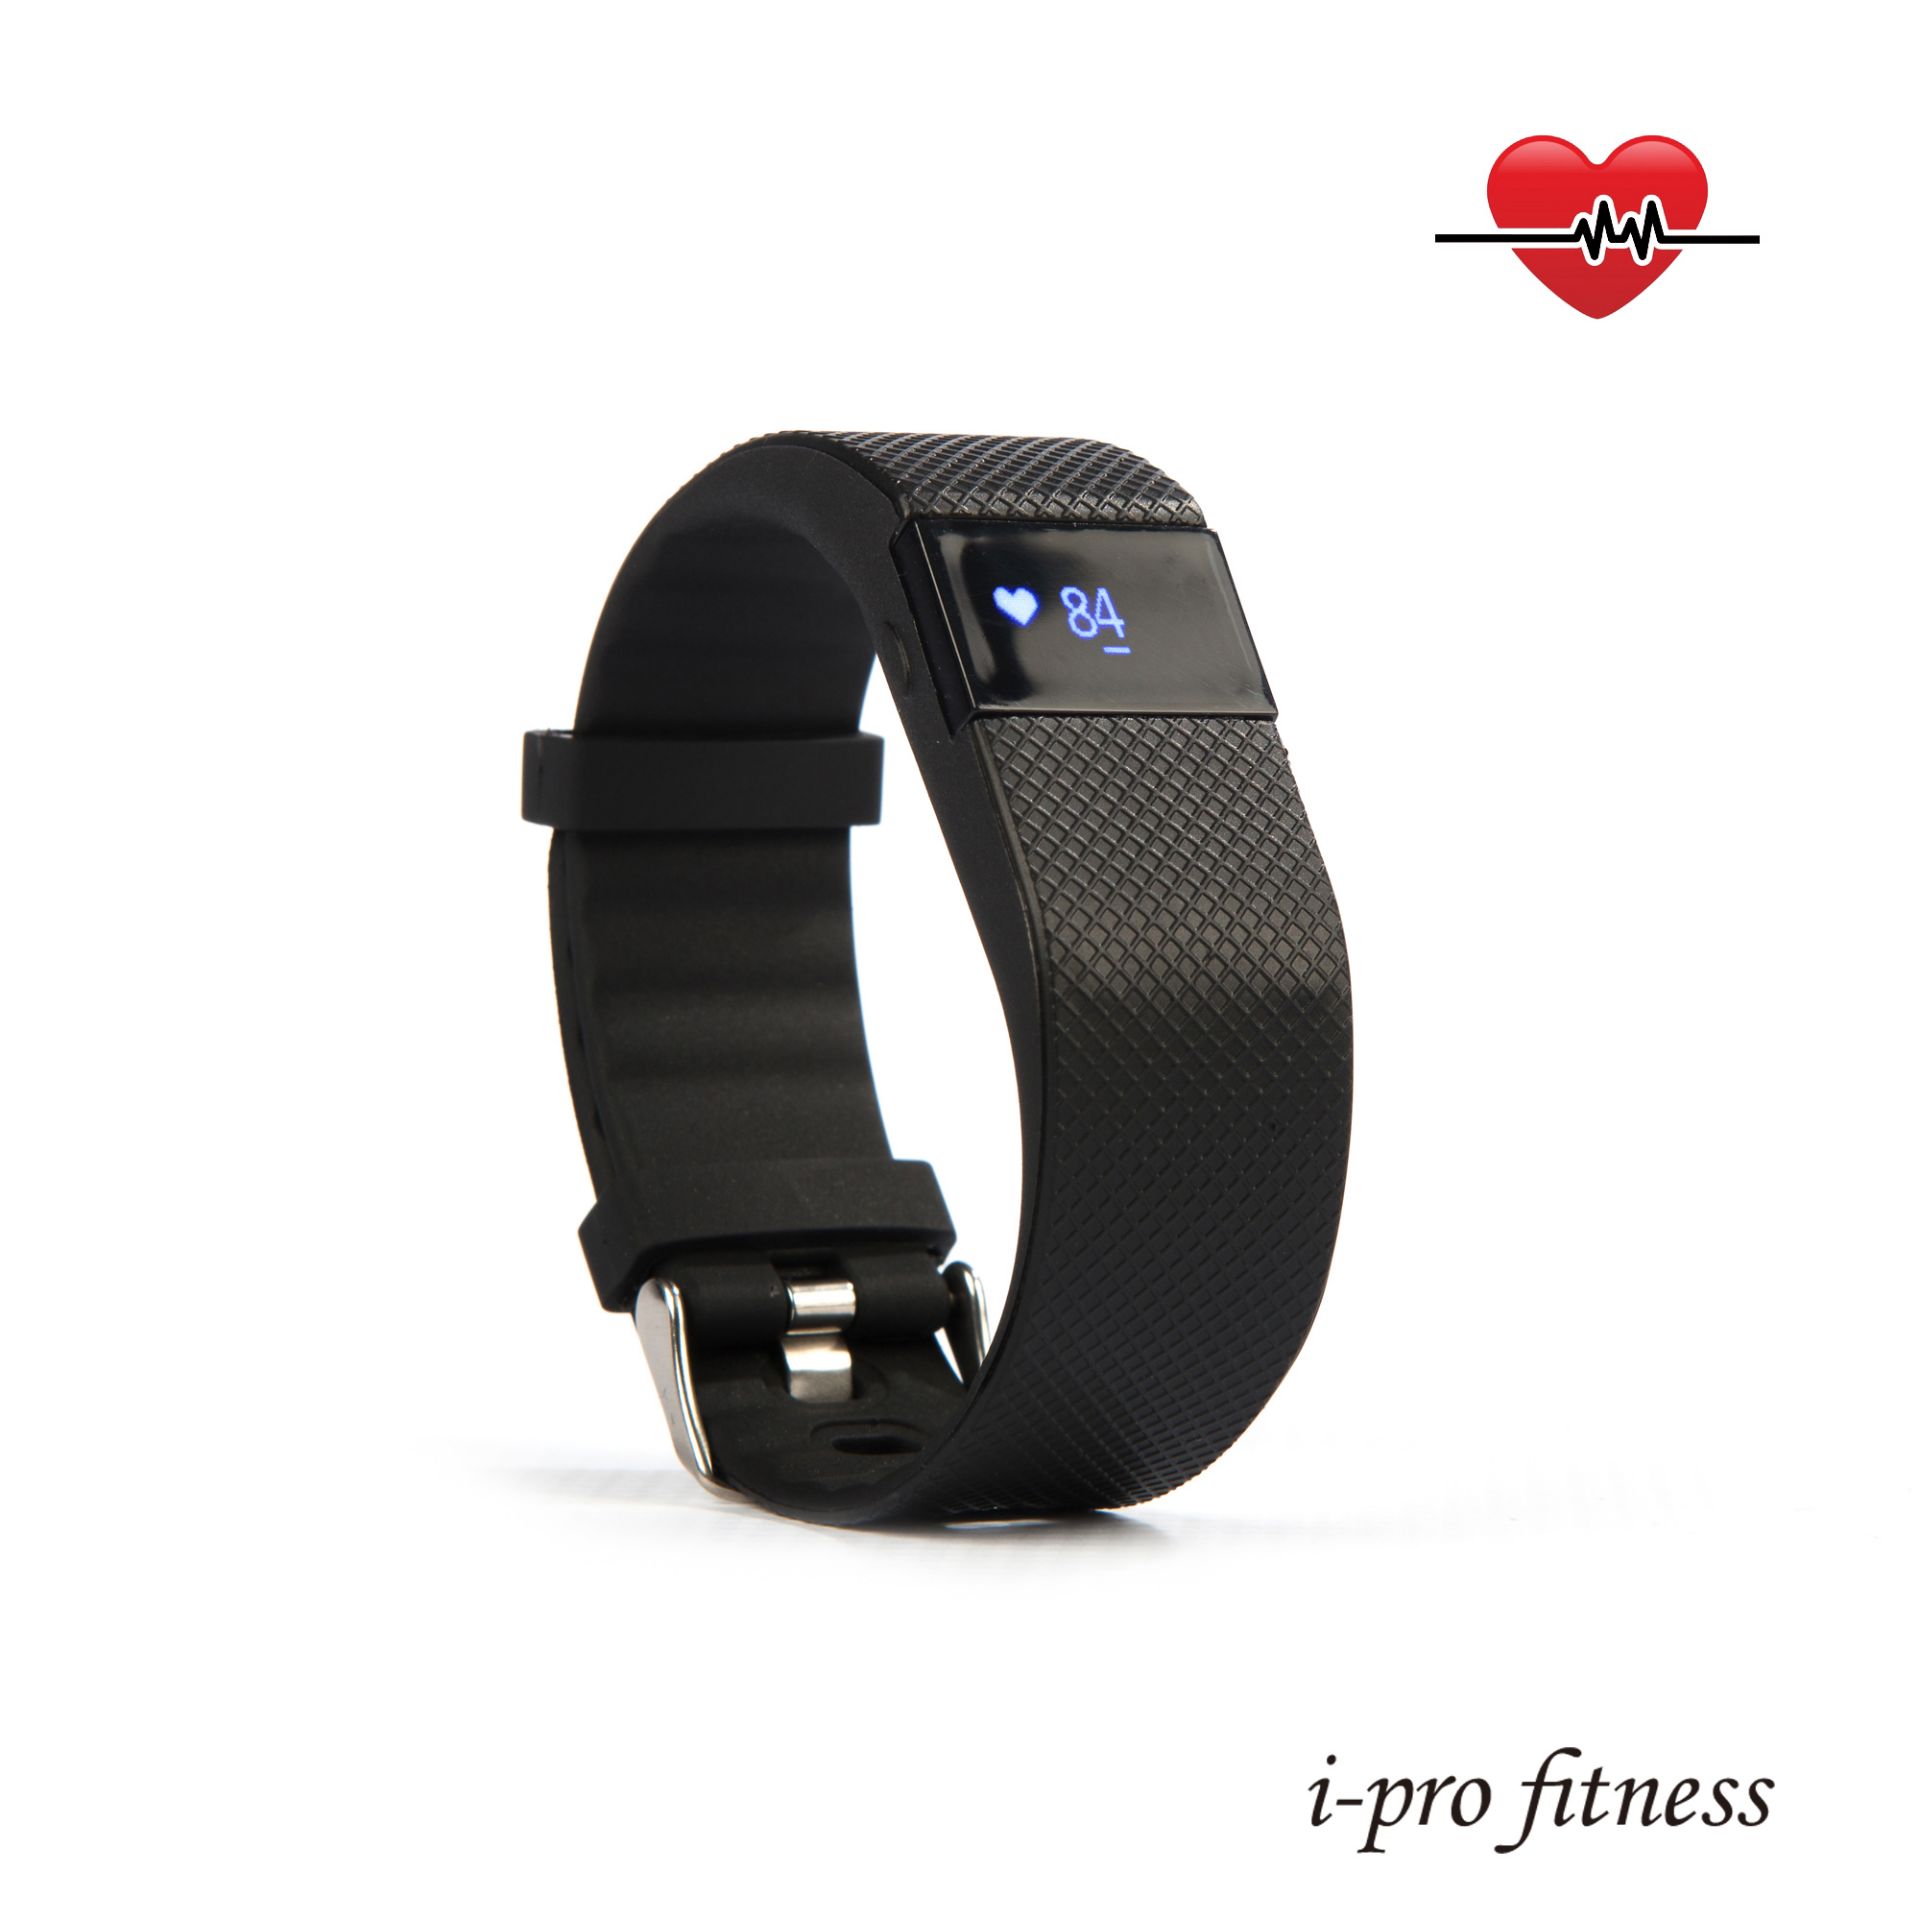 Fitness Tracker i-pro fitness, Bluetooth 4.0 Sports Smart Bracelet, Heart Rate Monitor, Pedometer. - Image 4 of 8